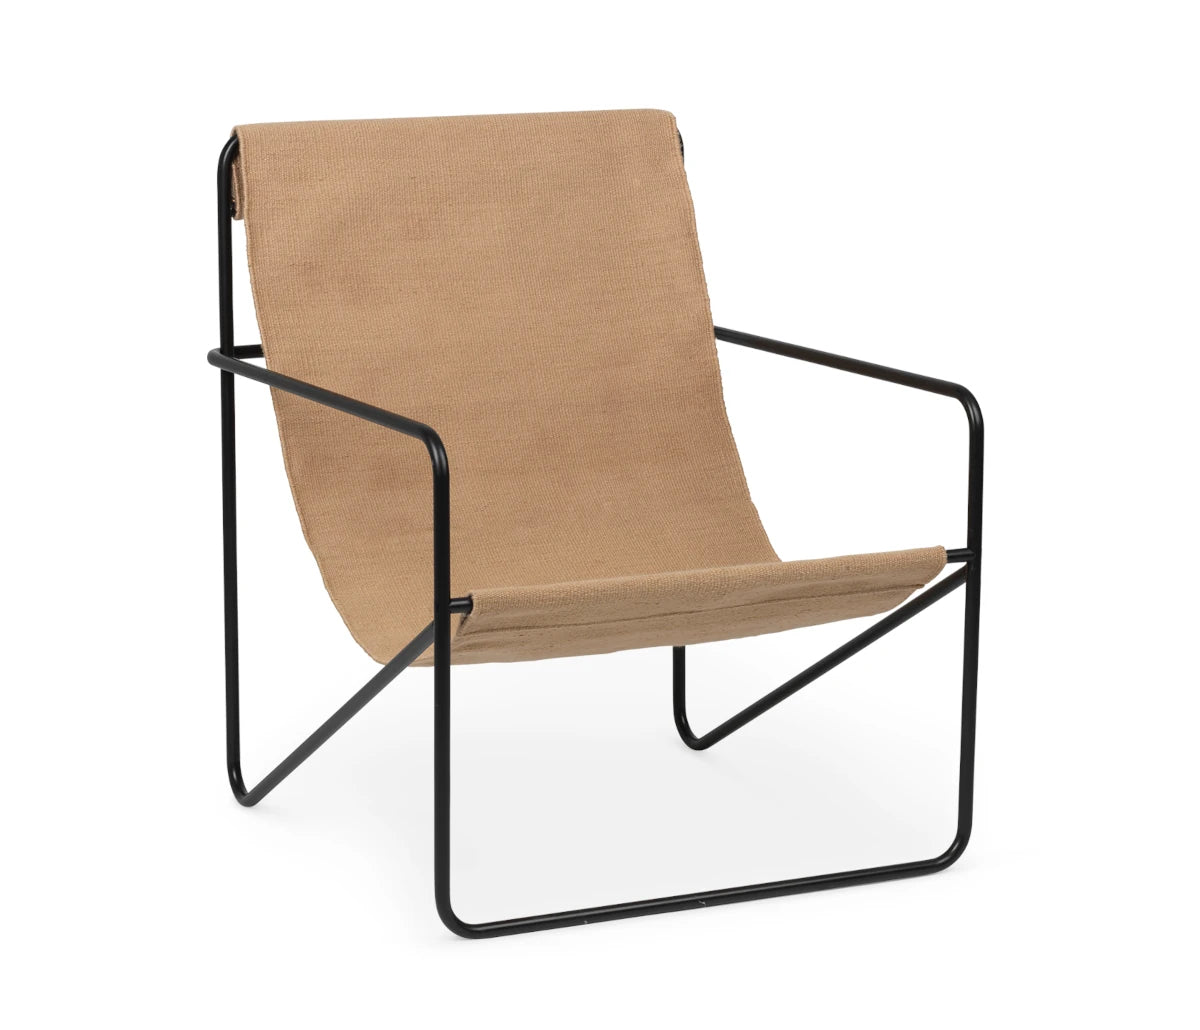 Desert Lounge Chair | Black Frame + Sand Fabric | by ferm Living - Lifestory